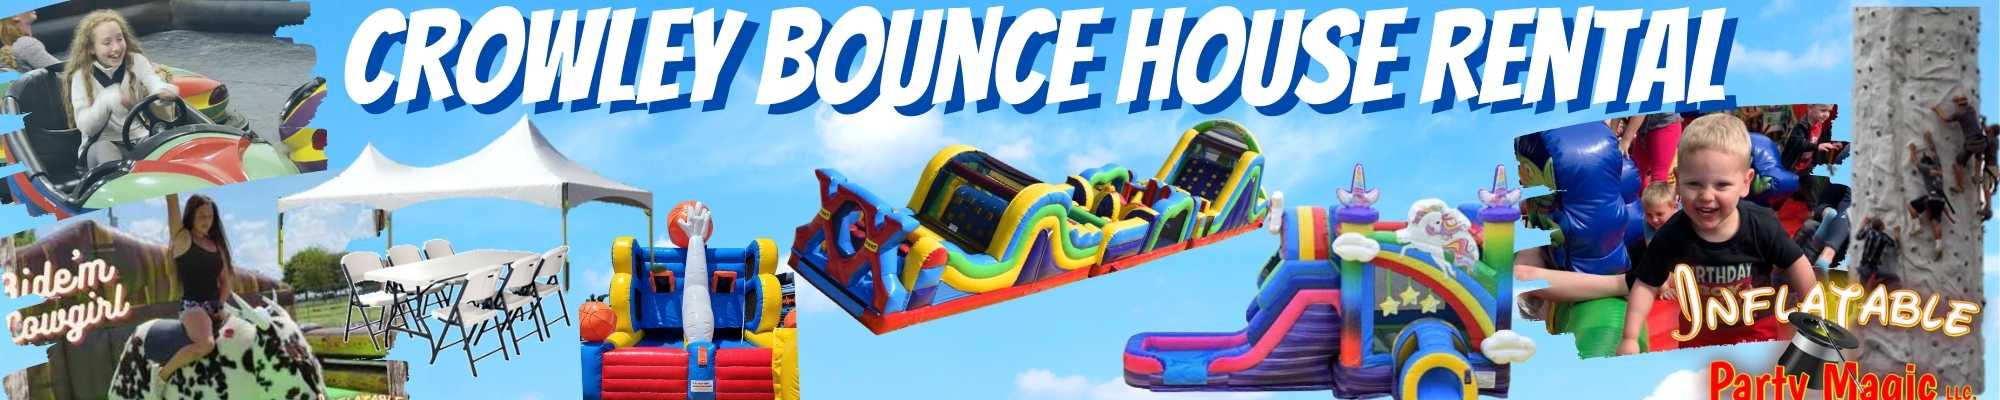 Crowley Bounce House Rentals